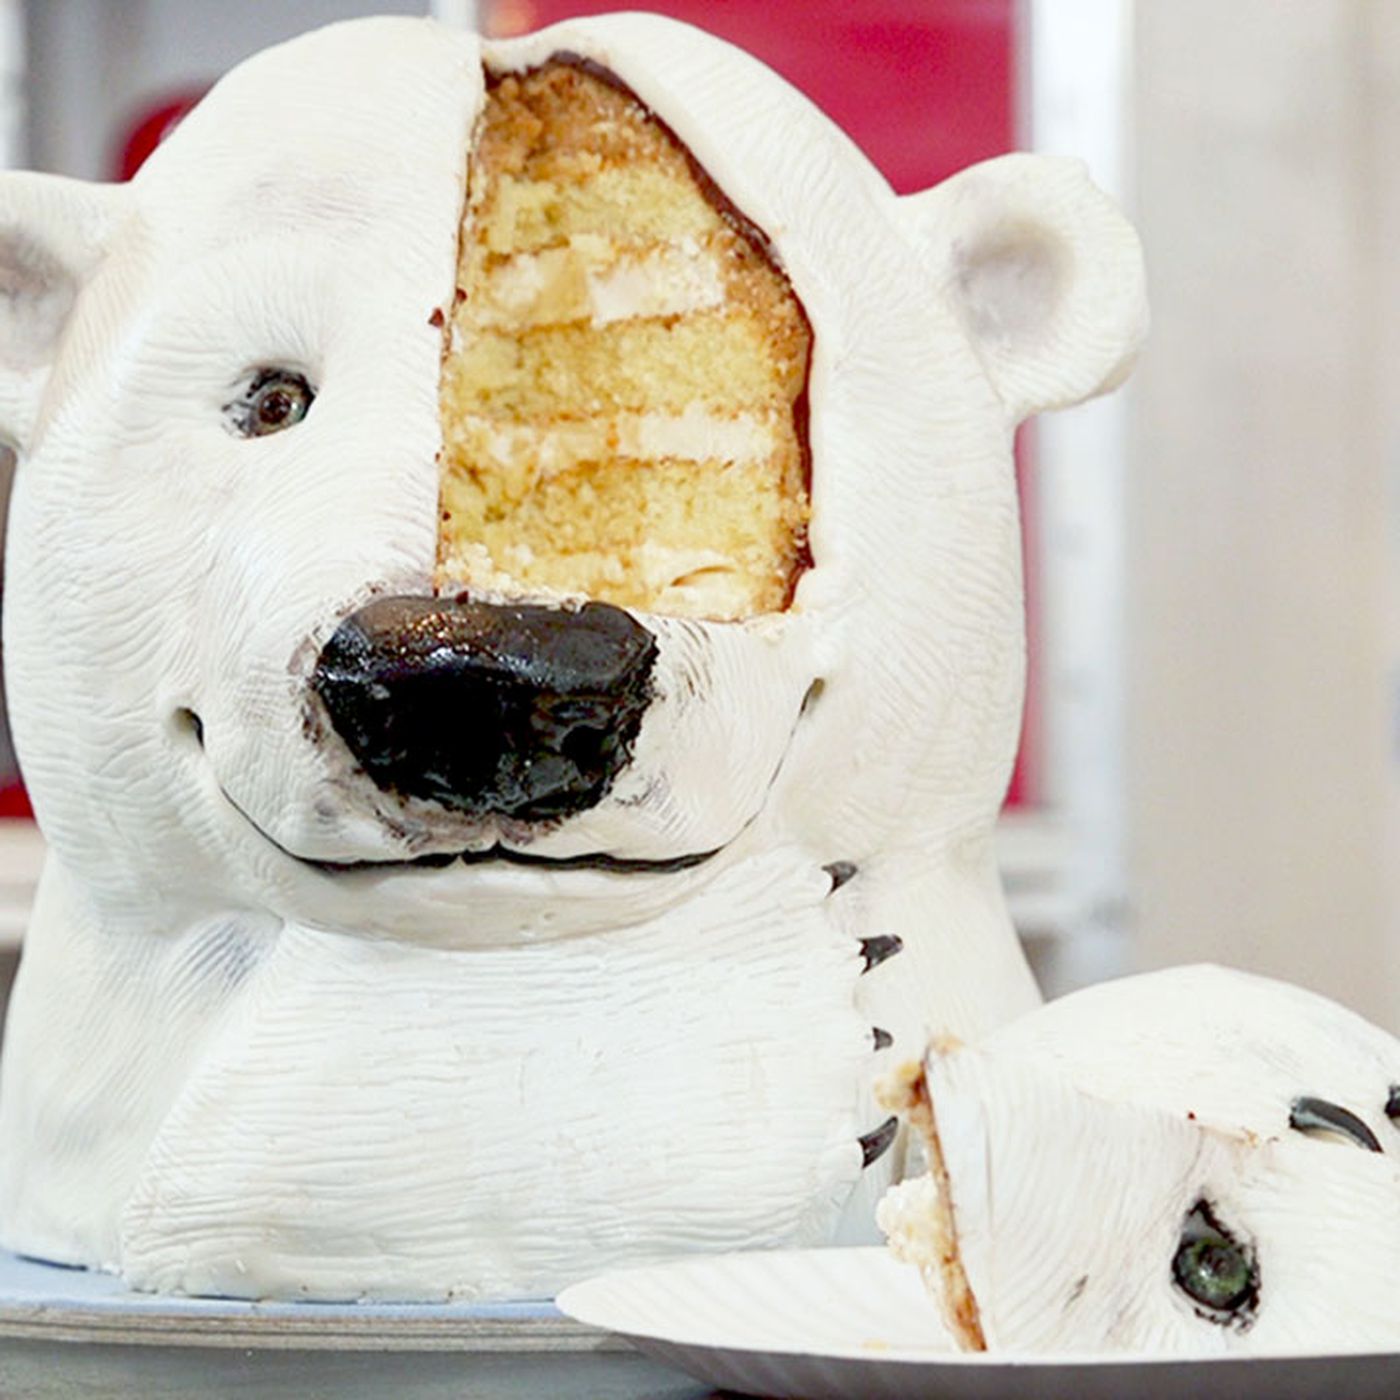 Watch: An NYC Baker Creates One Very Realistic Polar Bear Cake - Eater